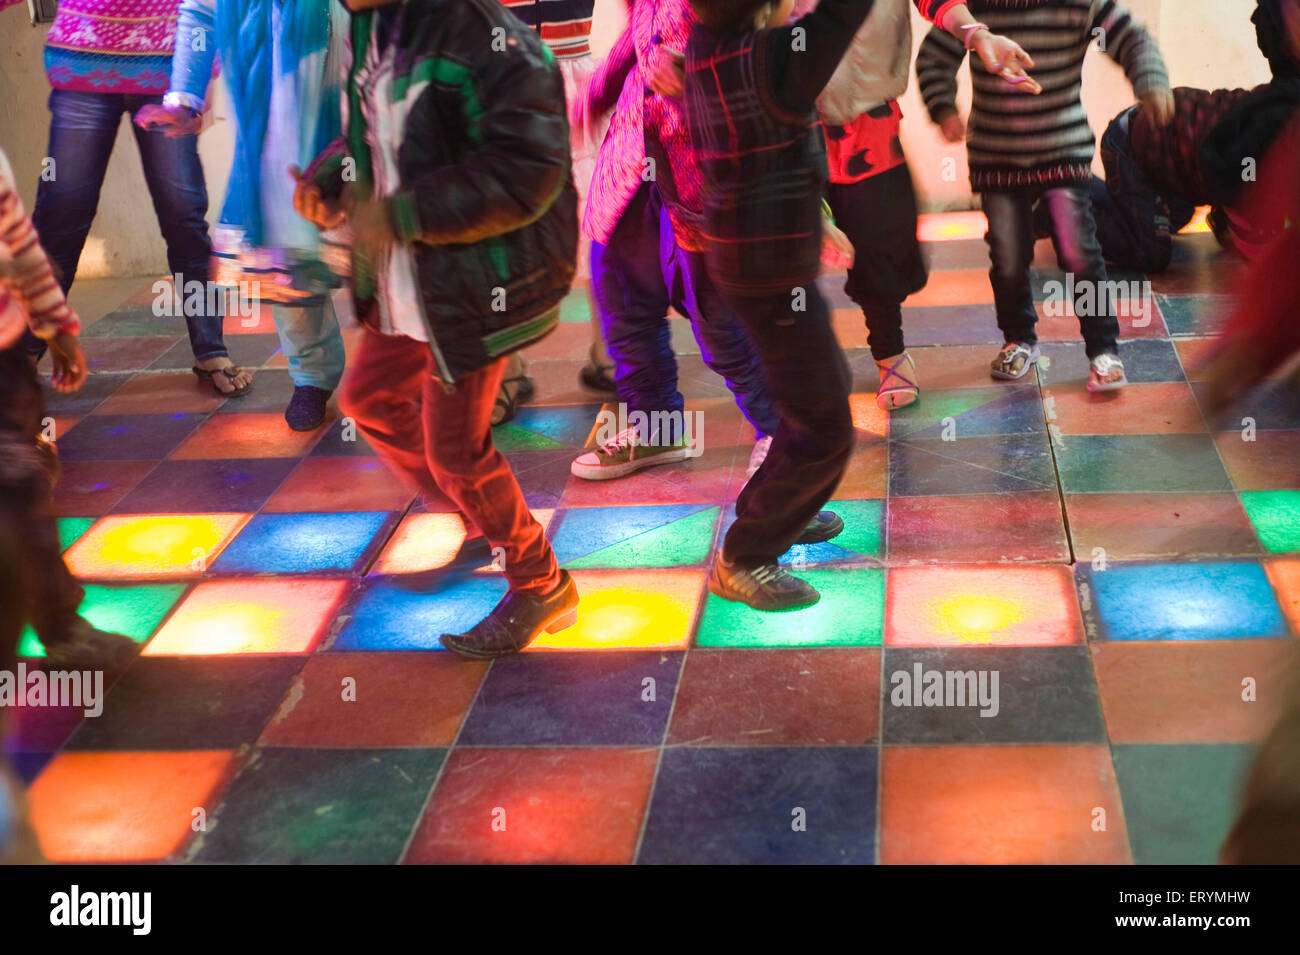 Kids on dance floor India Asia Stock Photo